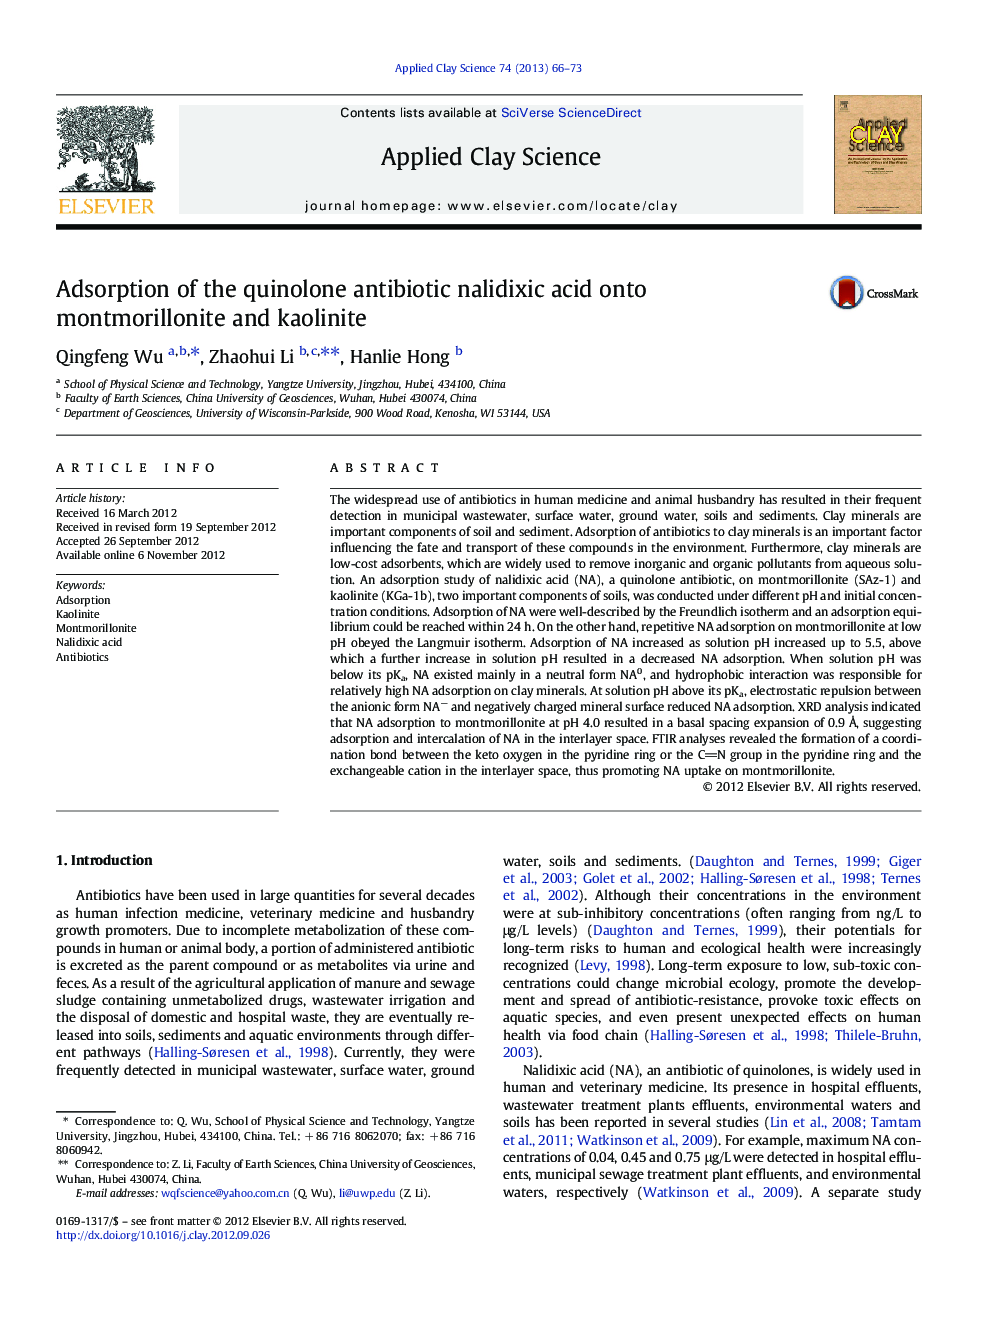 Adsorption of the quinolone antibiotic nalidixic acid onto montmorillonite and kaolinite